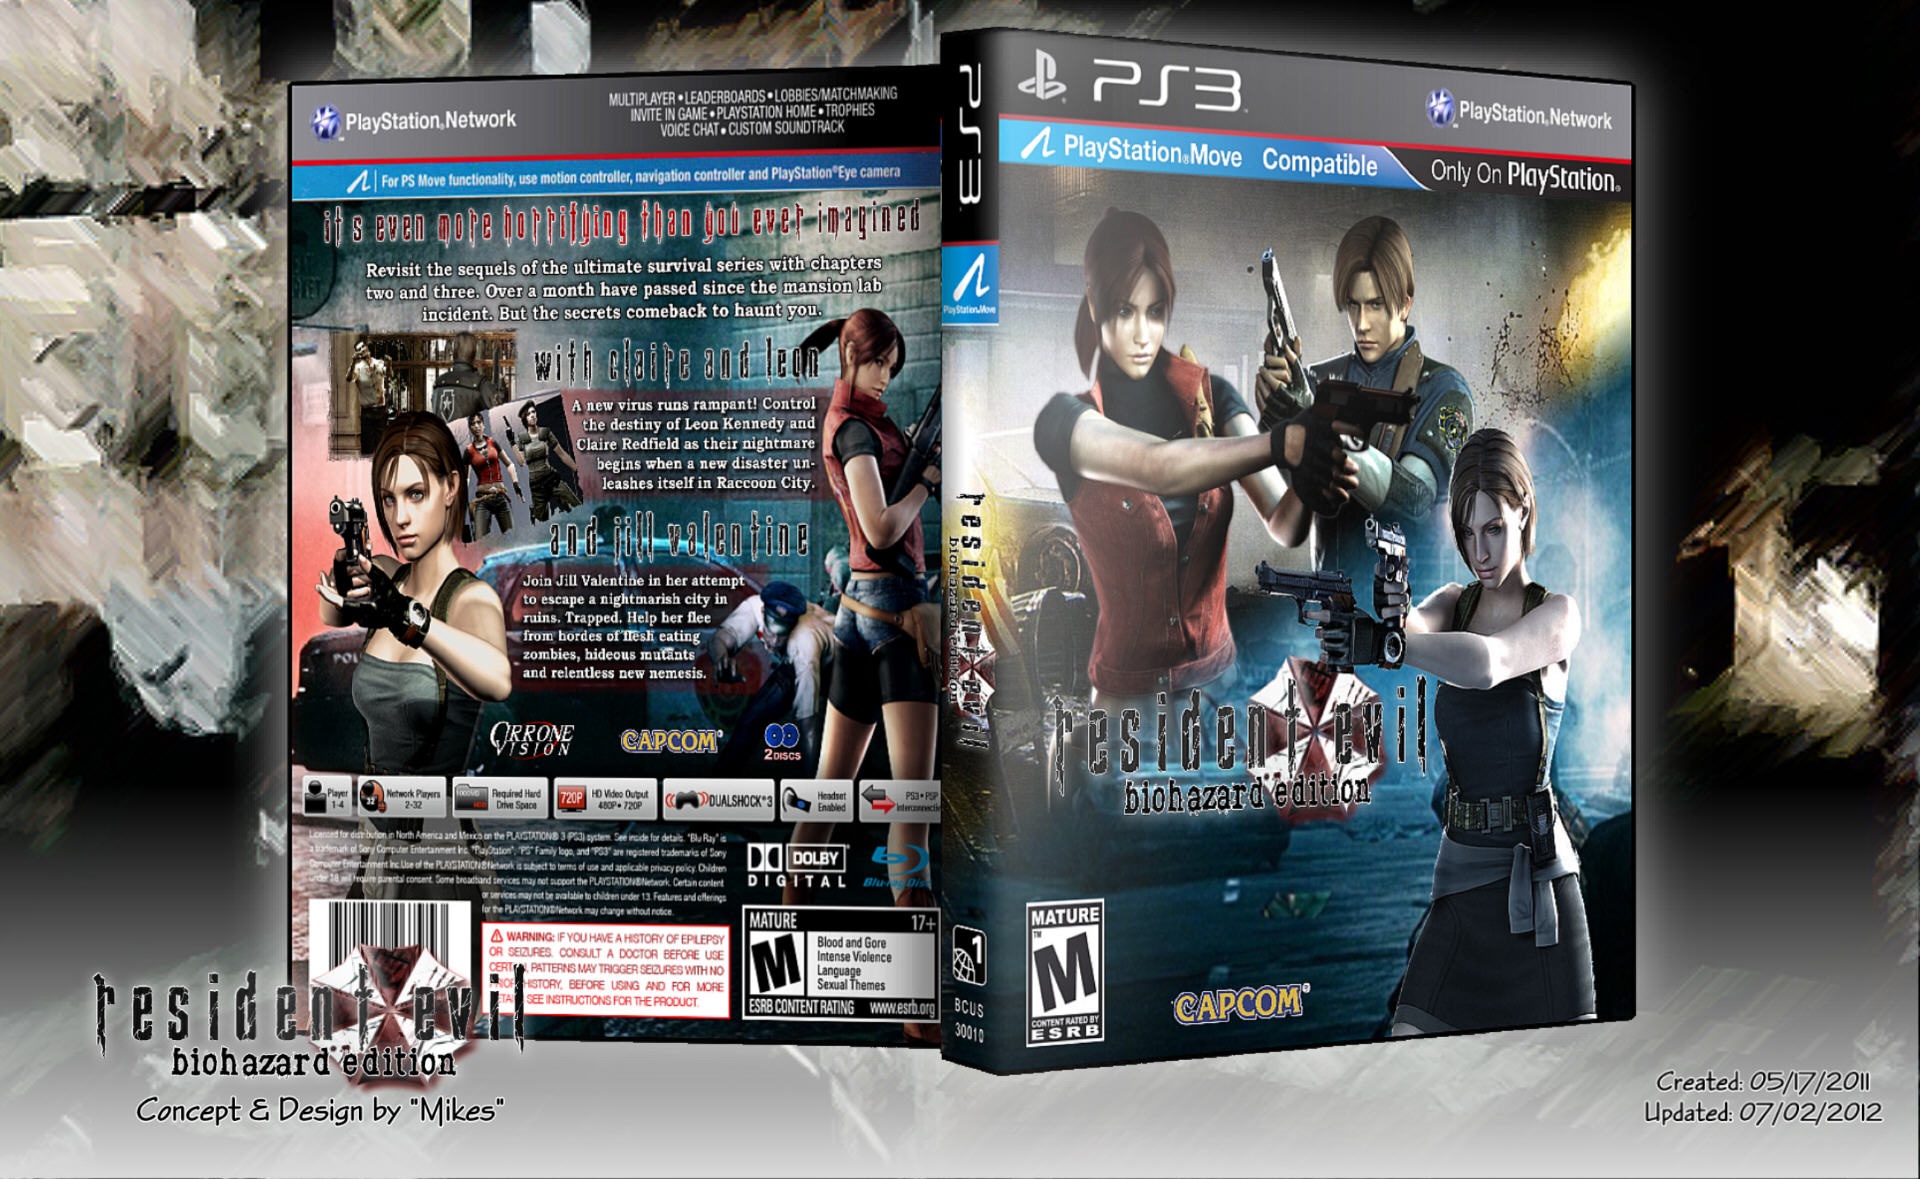 Resident Evil: Biohazard Edition box cover